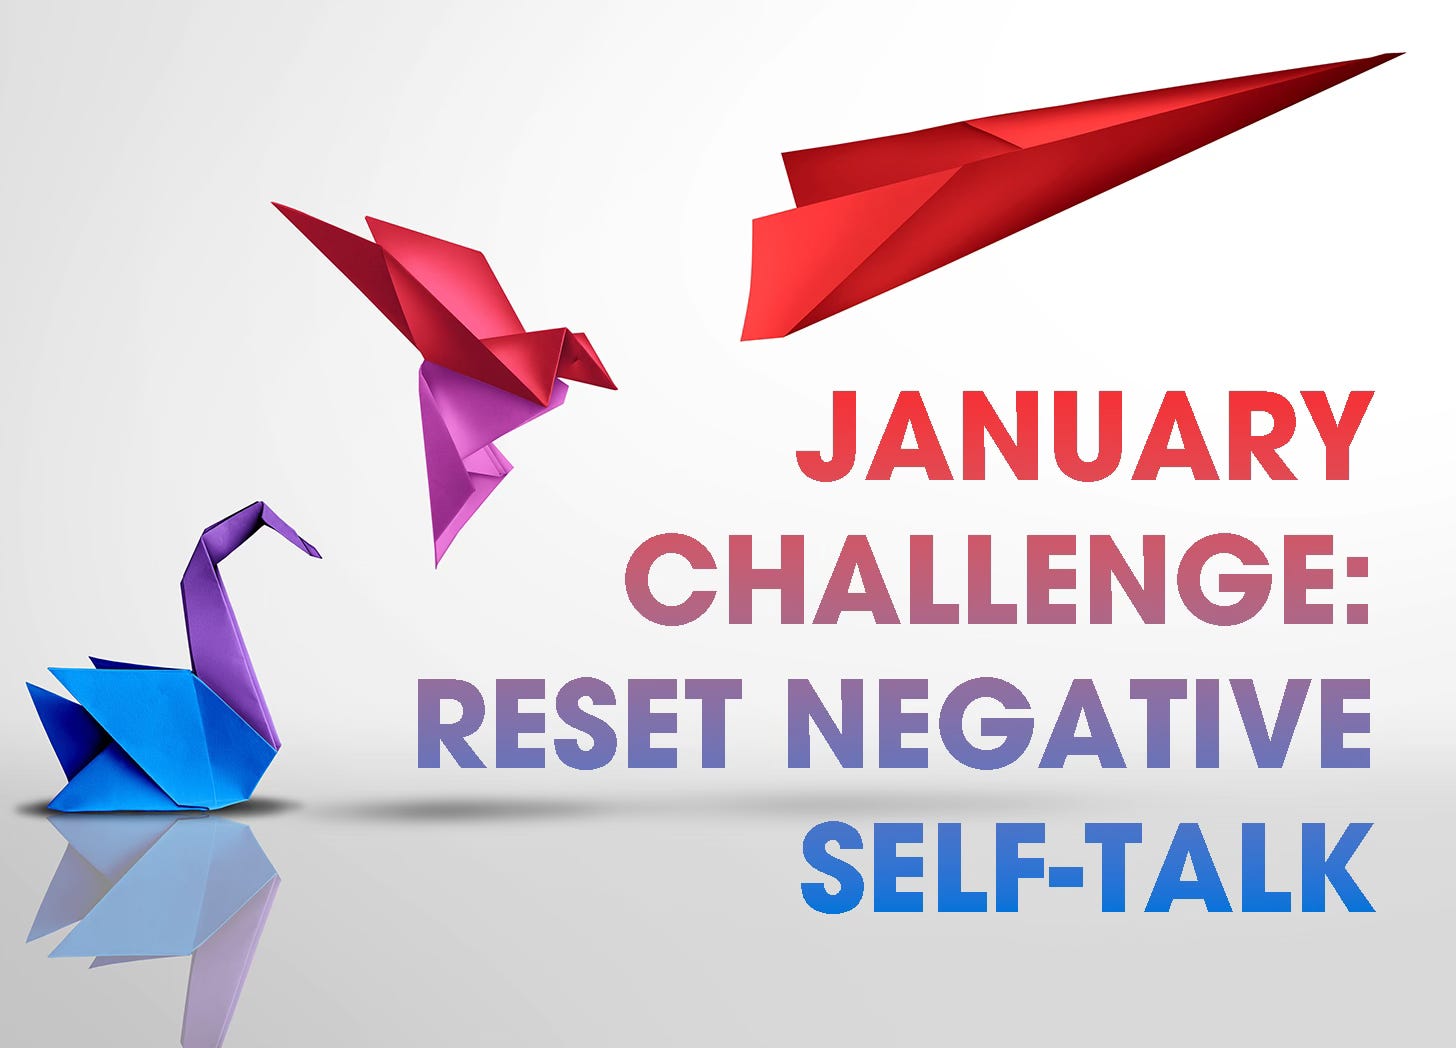 January challenge: reset negative self-talk